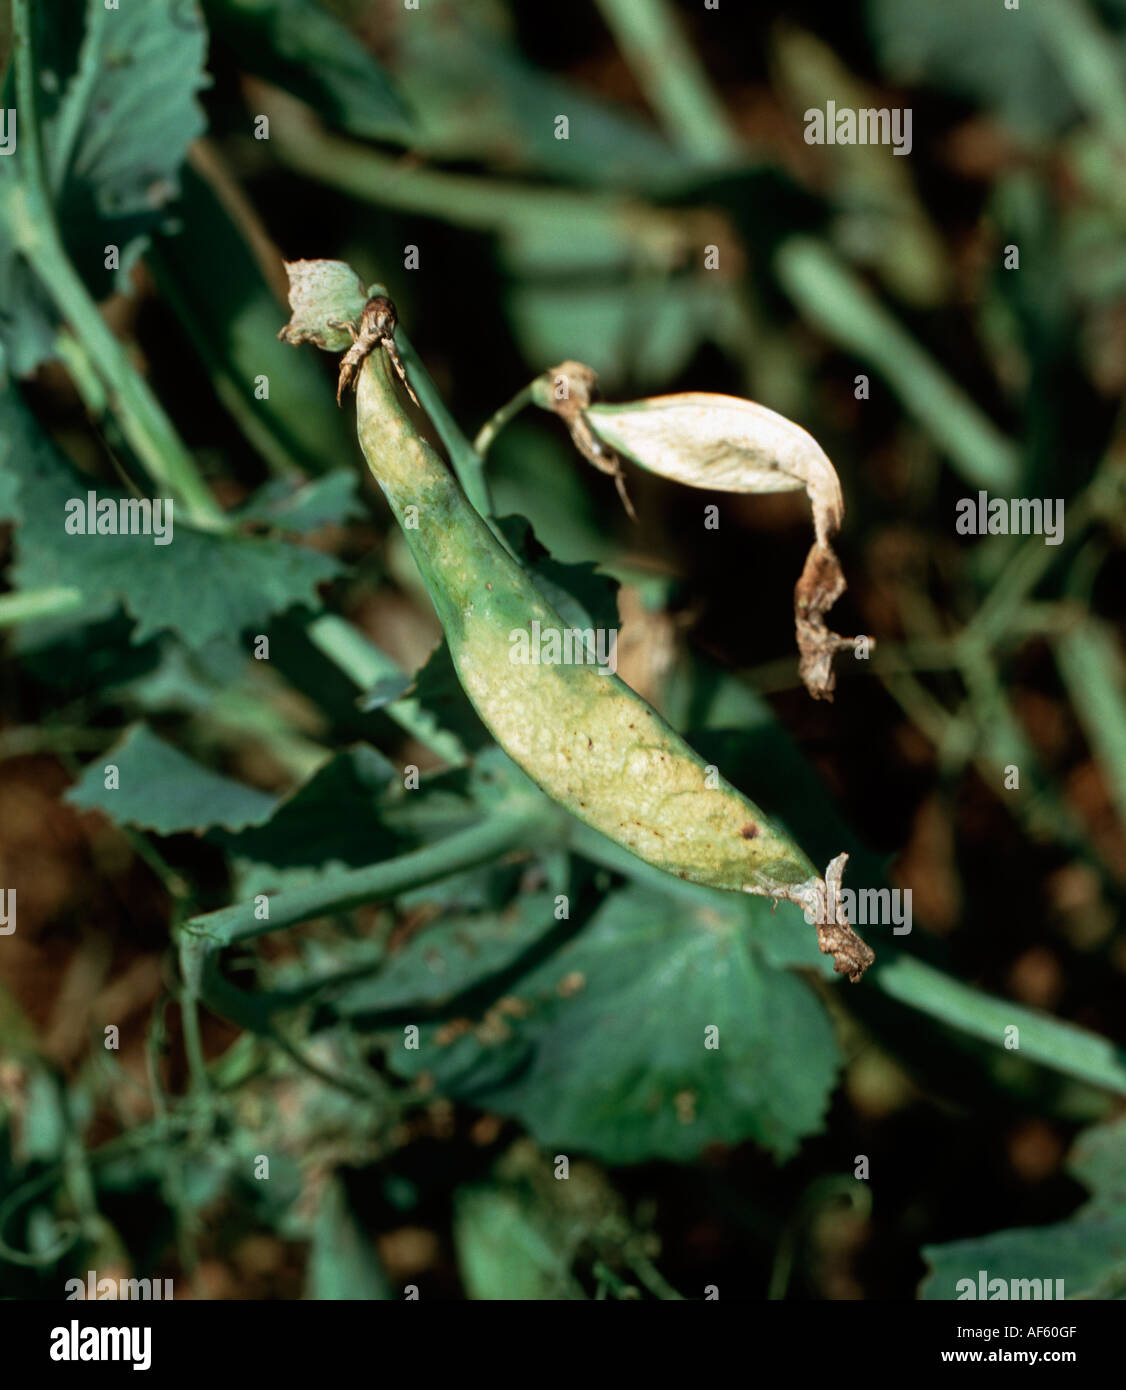 Downy mildew Peronospora pisi pea pod damage caused by the disease Stock Photo